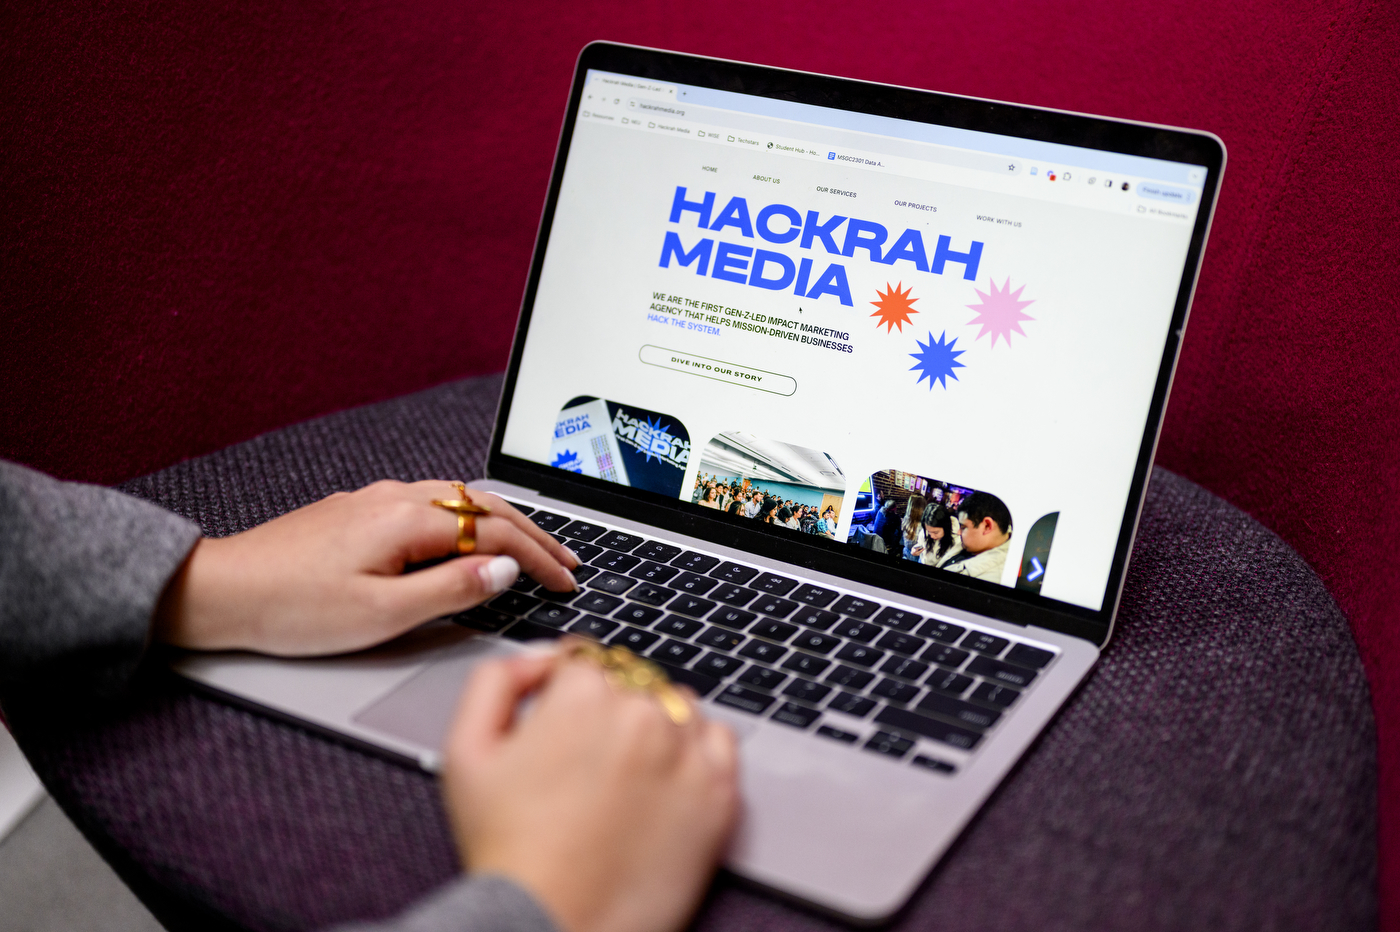 Shirley Wang views the Hackrah Media website on her laptop.